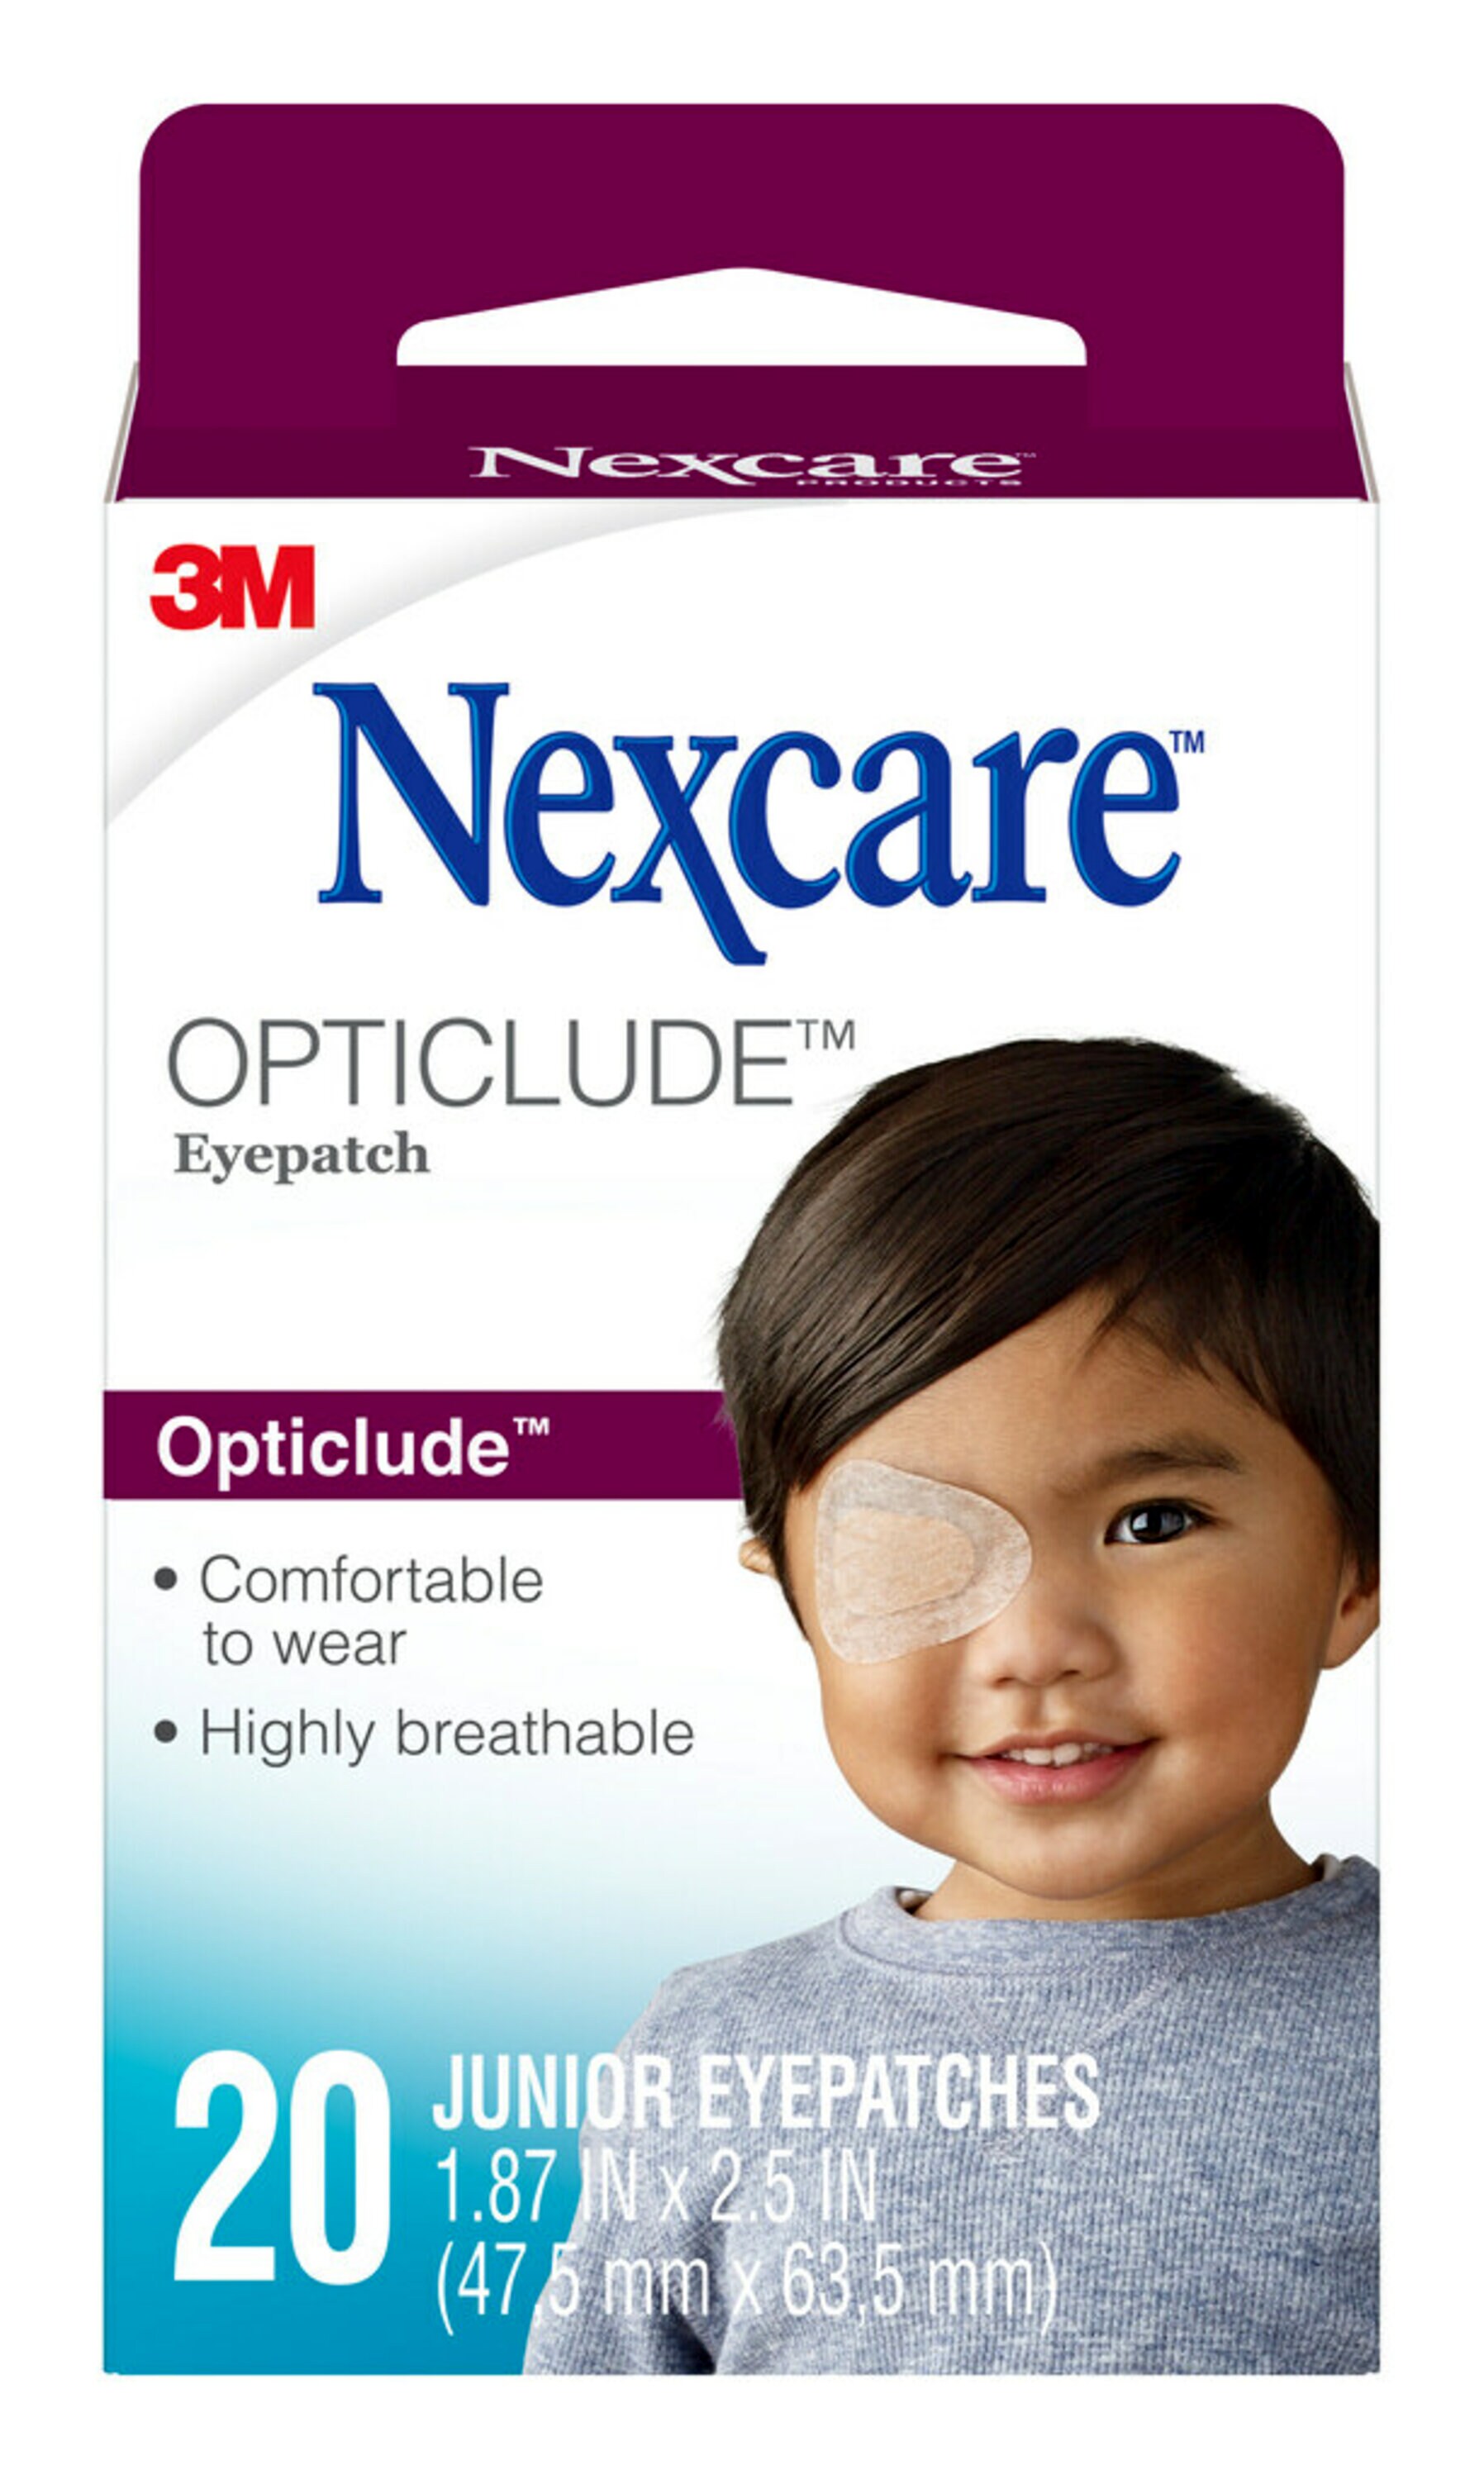 Nexcare Opticlude Orthoptic Comfort Eyepatch, Junior Eyepatches, 20 Count - image 1 of 6